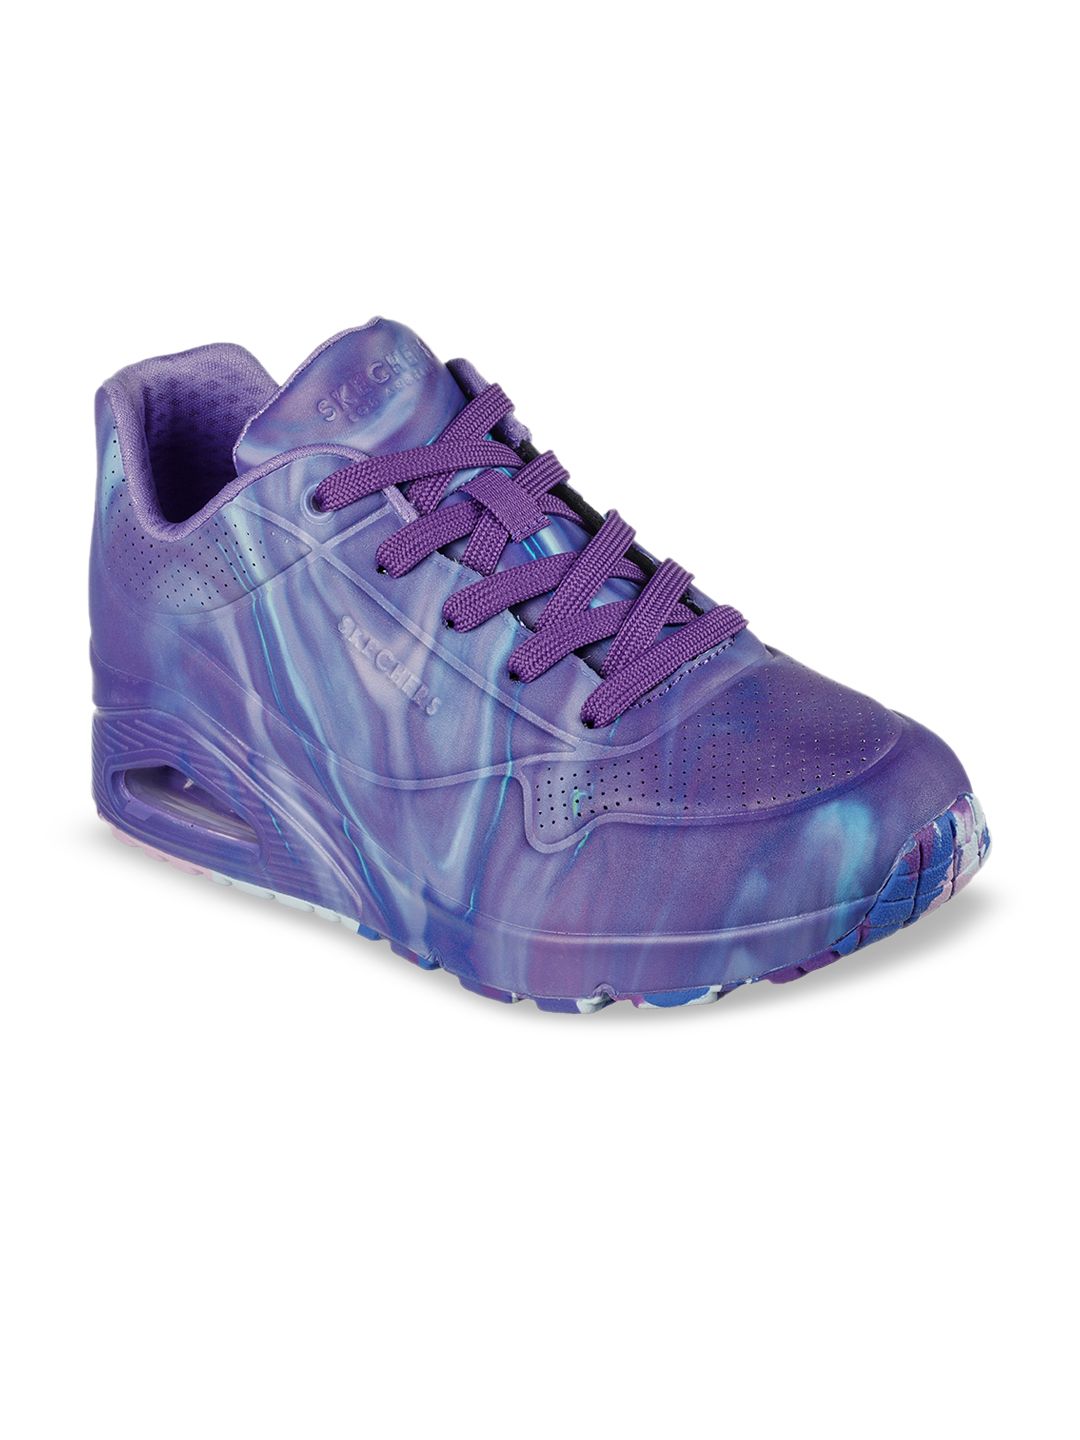 Skechers Women Purple Woven Design Sneakers Price in India